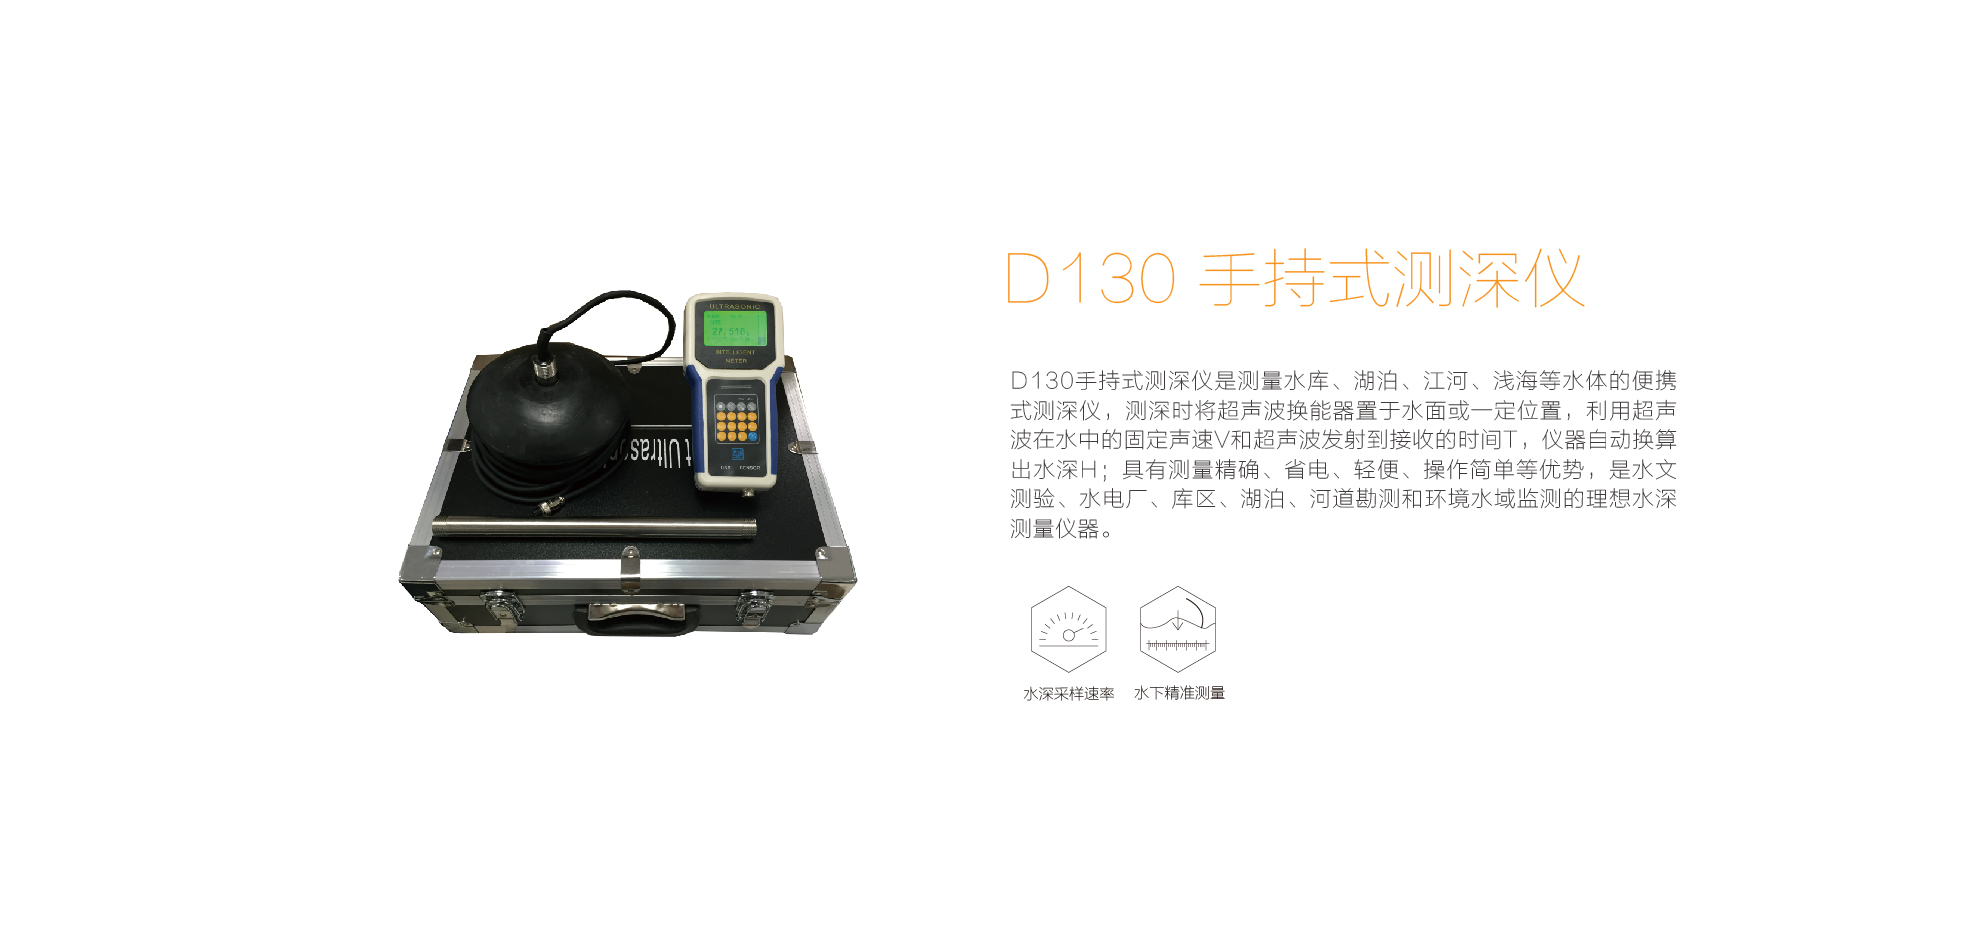 D130 手持式测深仪